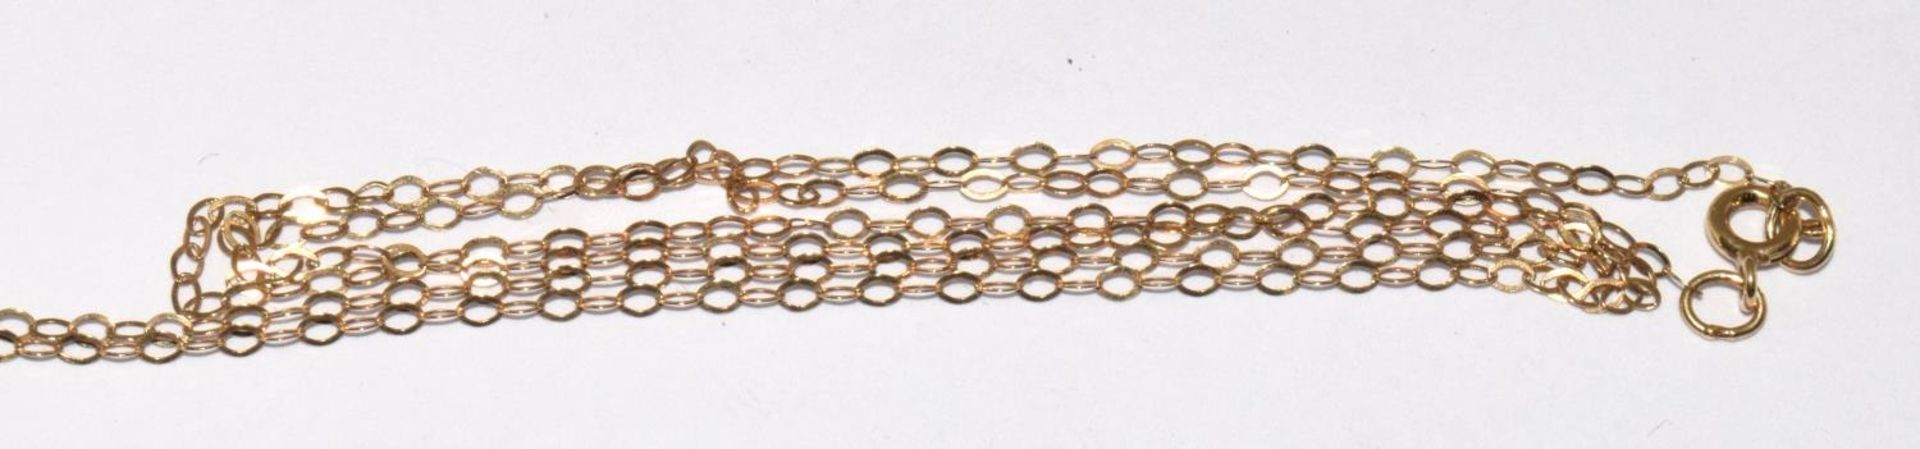 9ct gold Sapphire pendant necklace 40cm long chain - Image 5 of 6